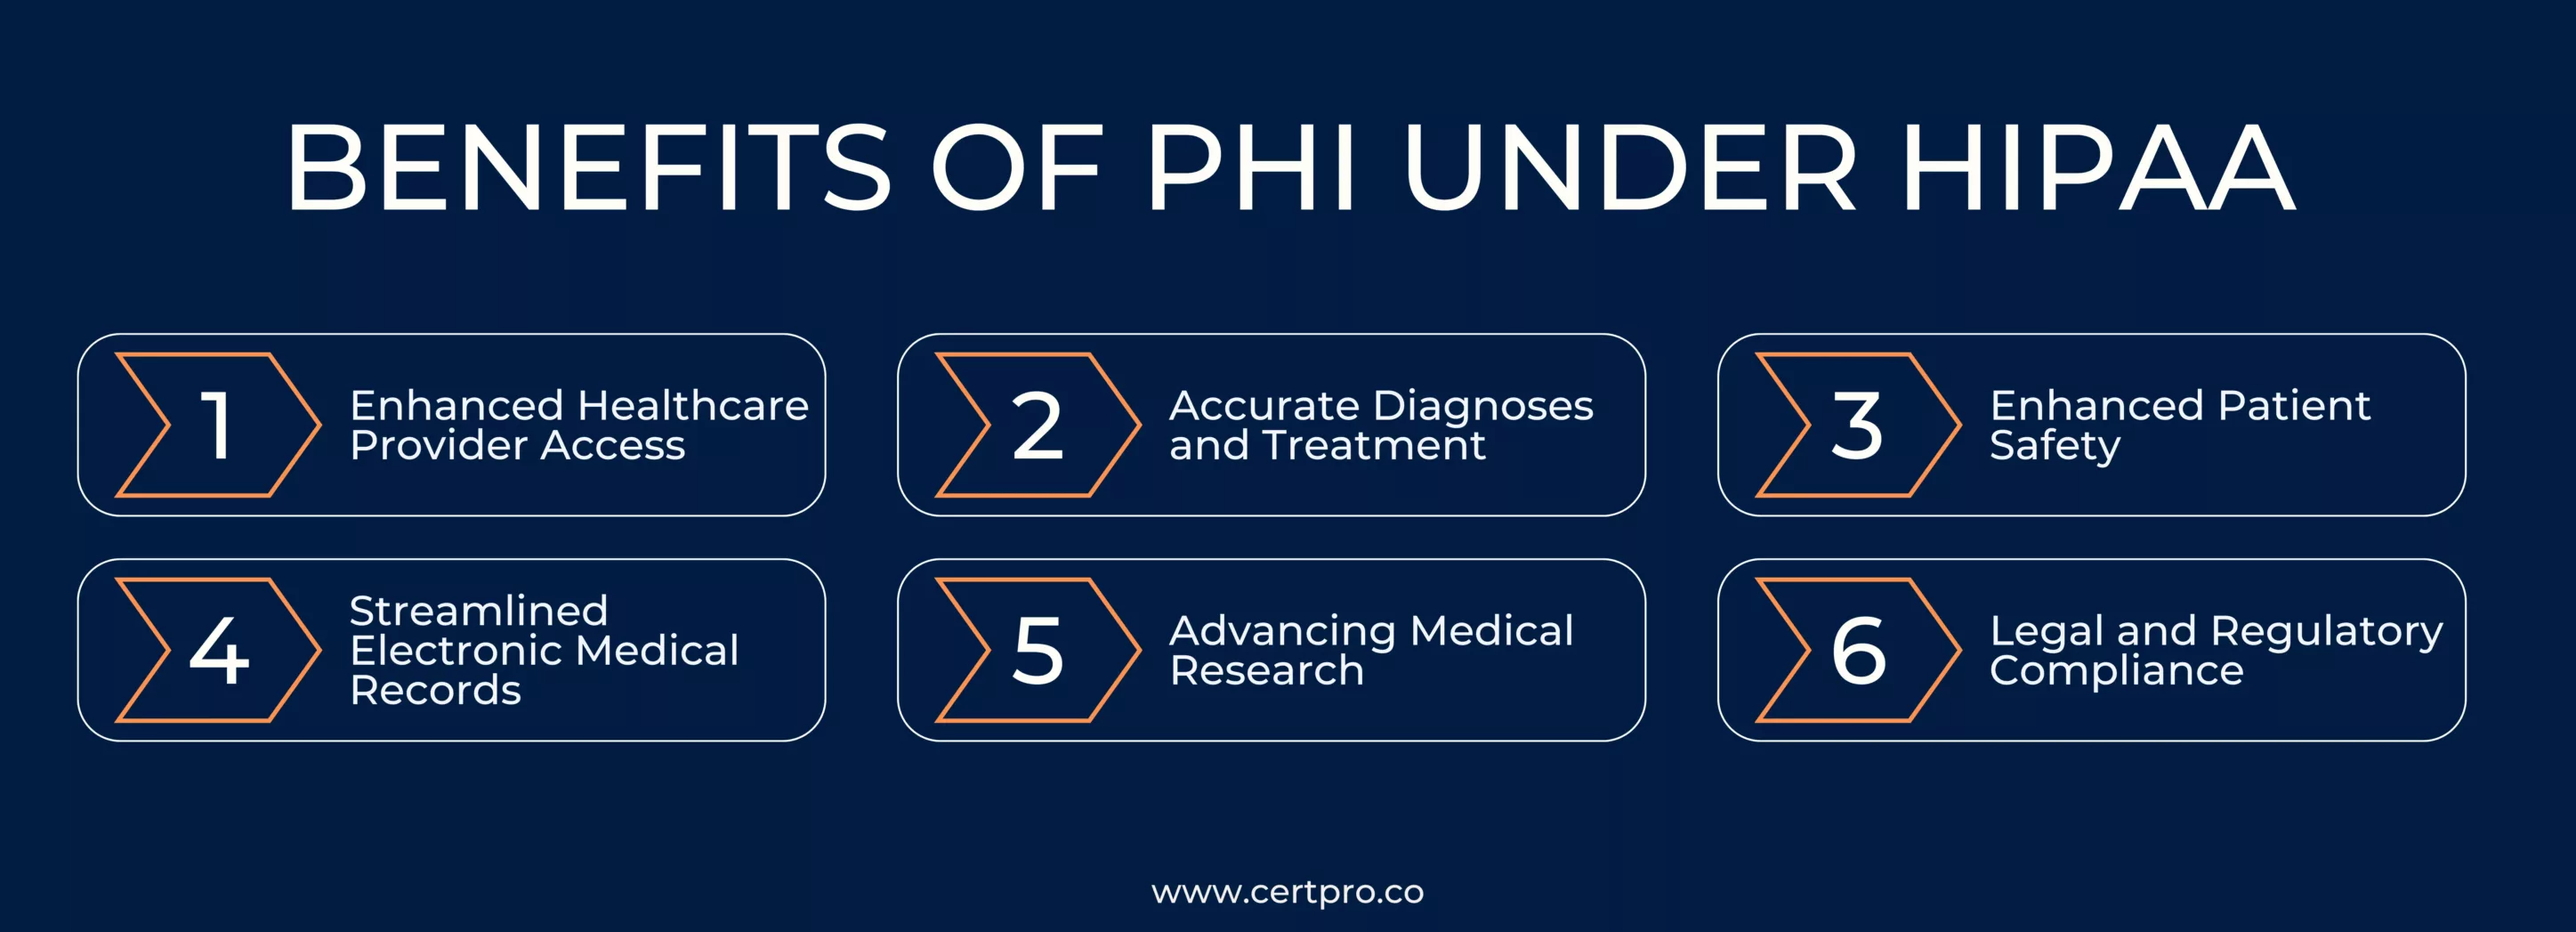 BENEFITS OF PHI UNDER HIPAA